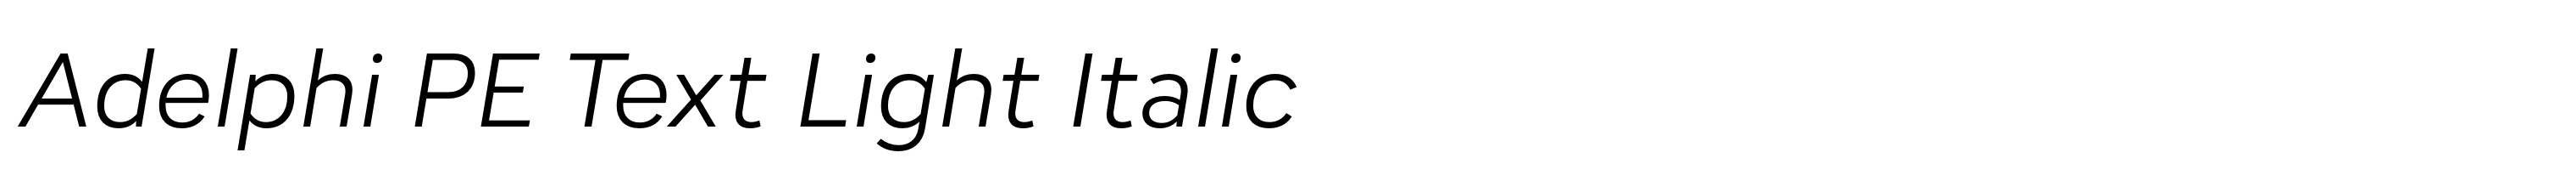 Adelphi PE Text Light Italic